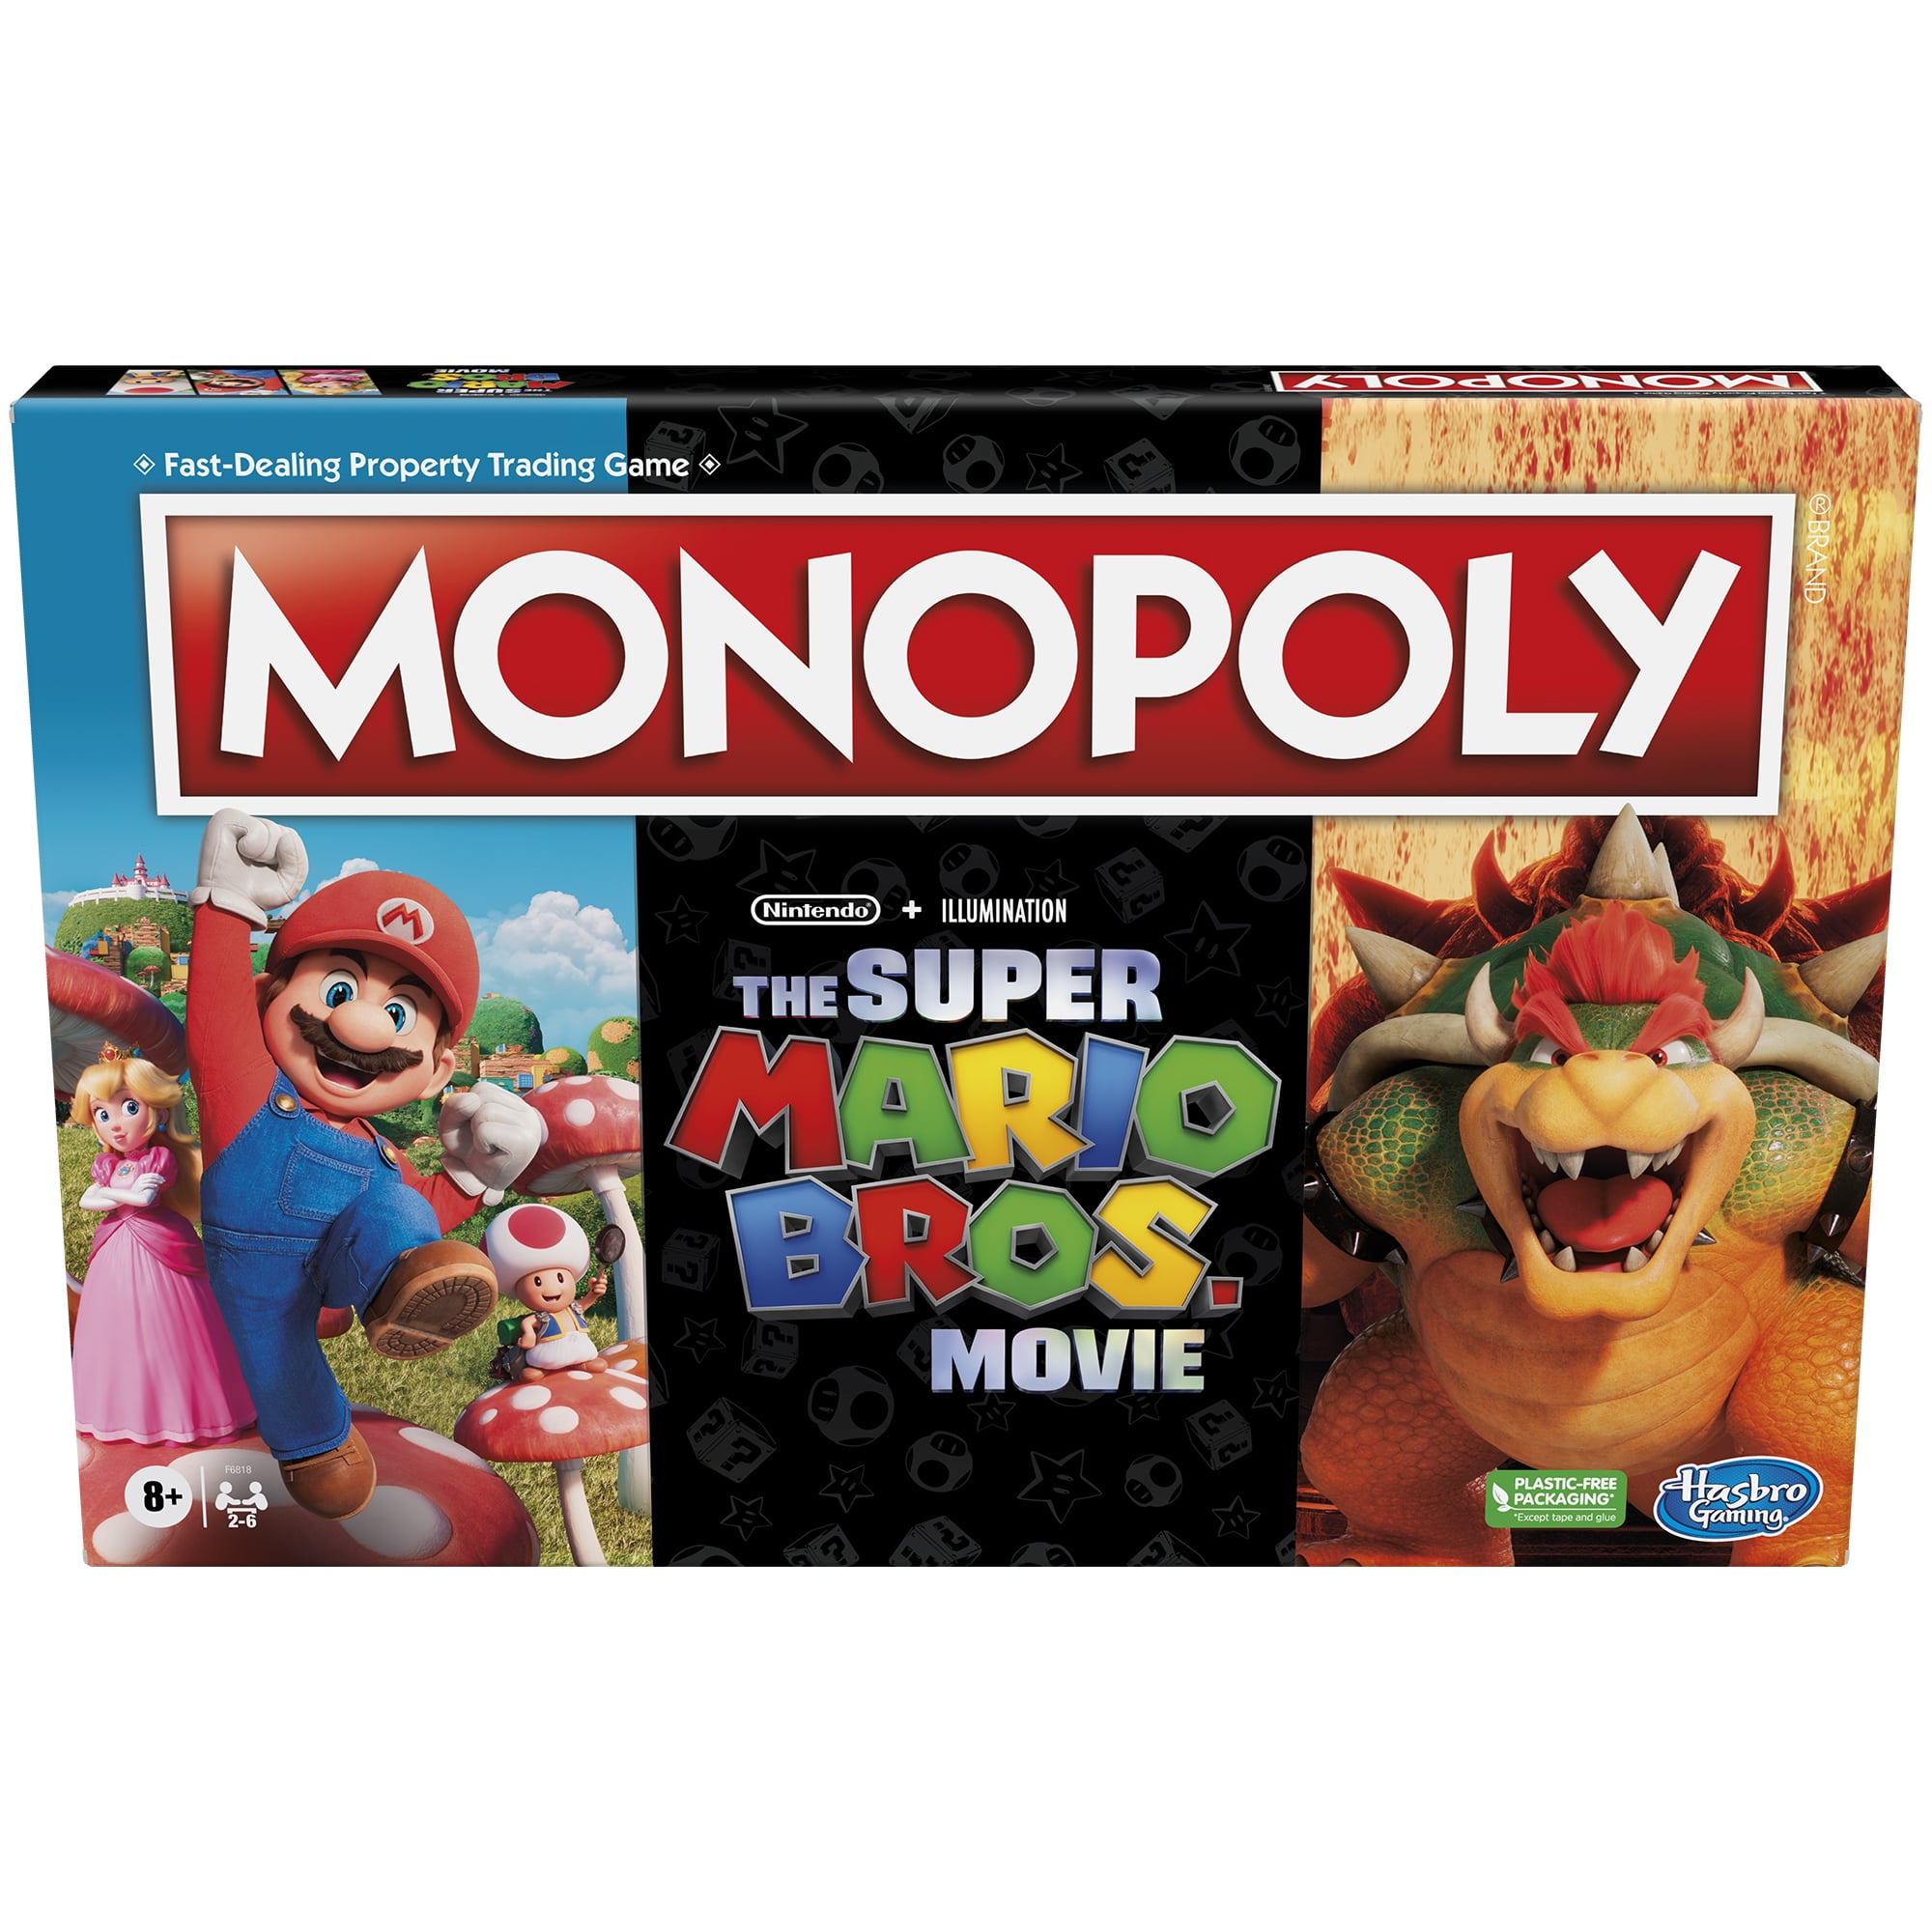 Review* Monopoly Gamer Mario Kart